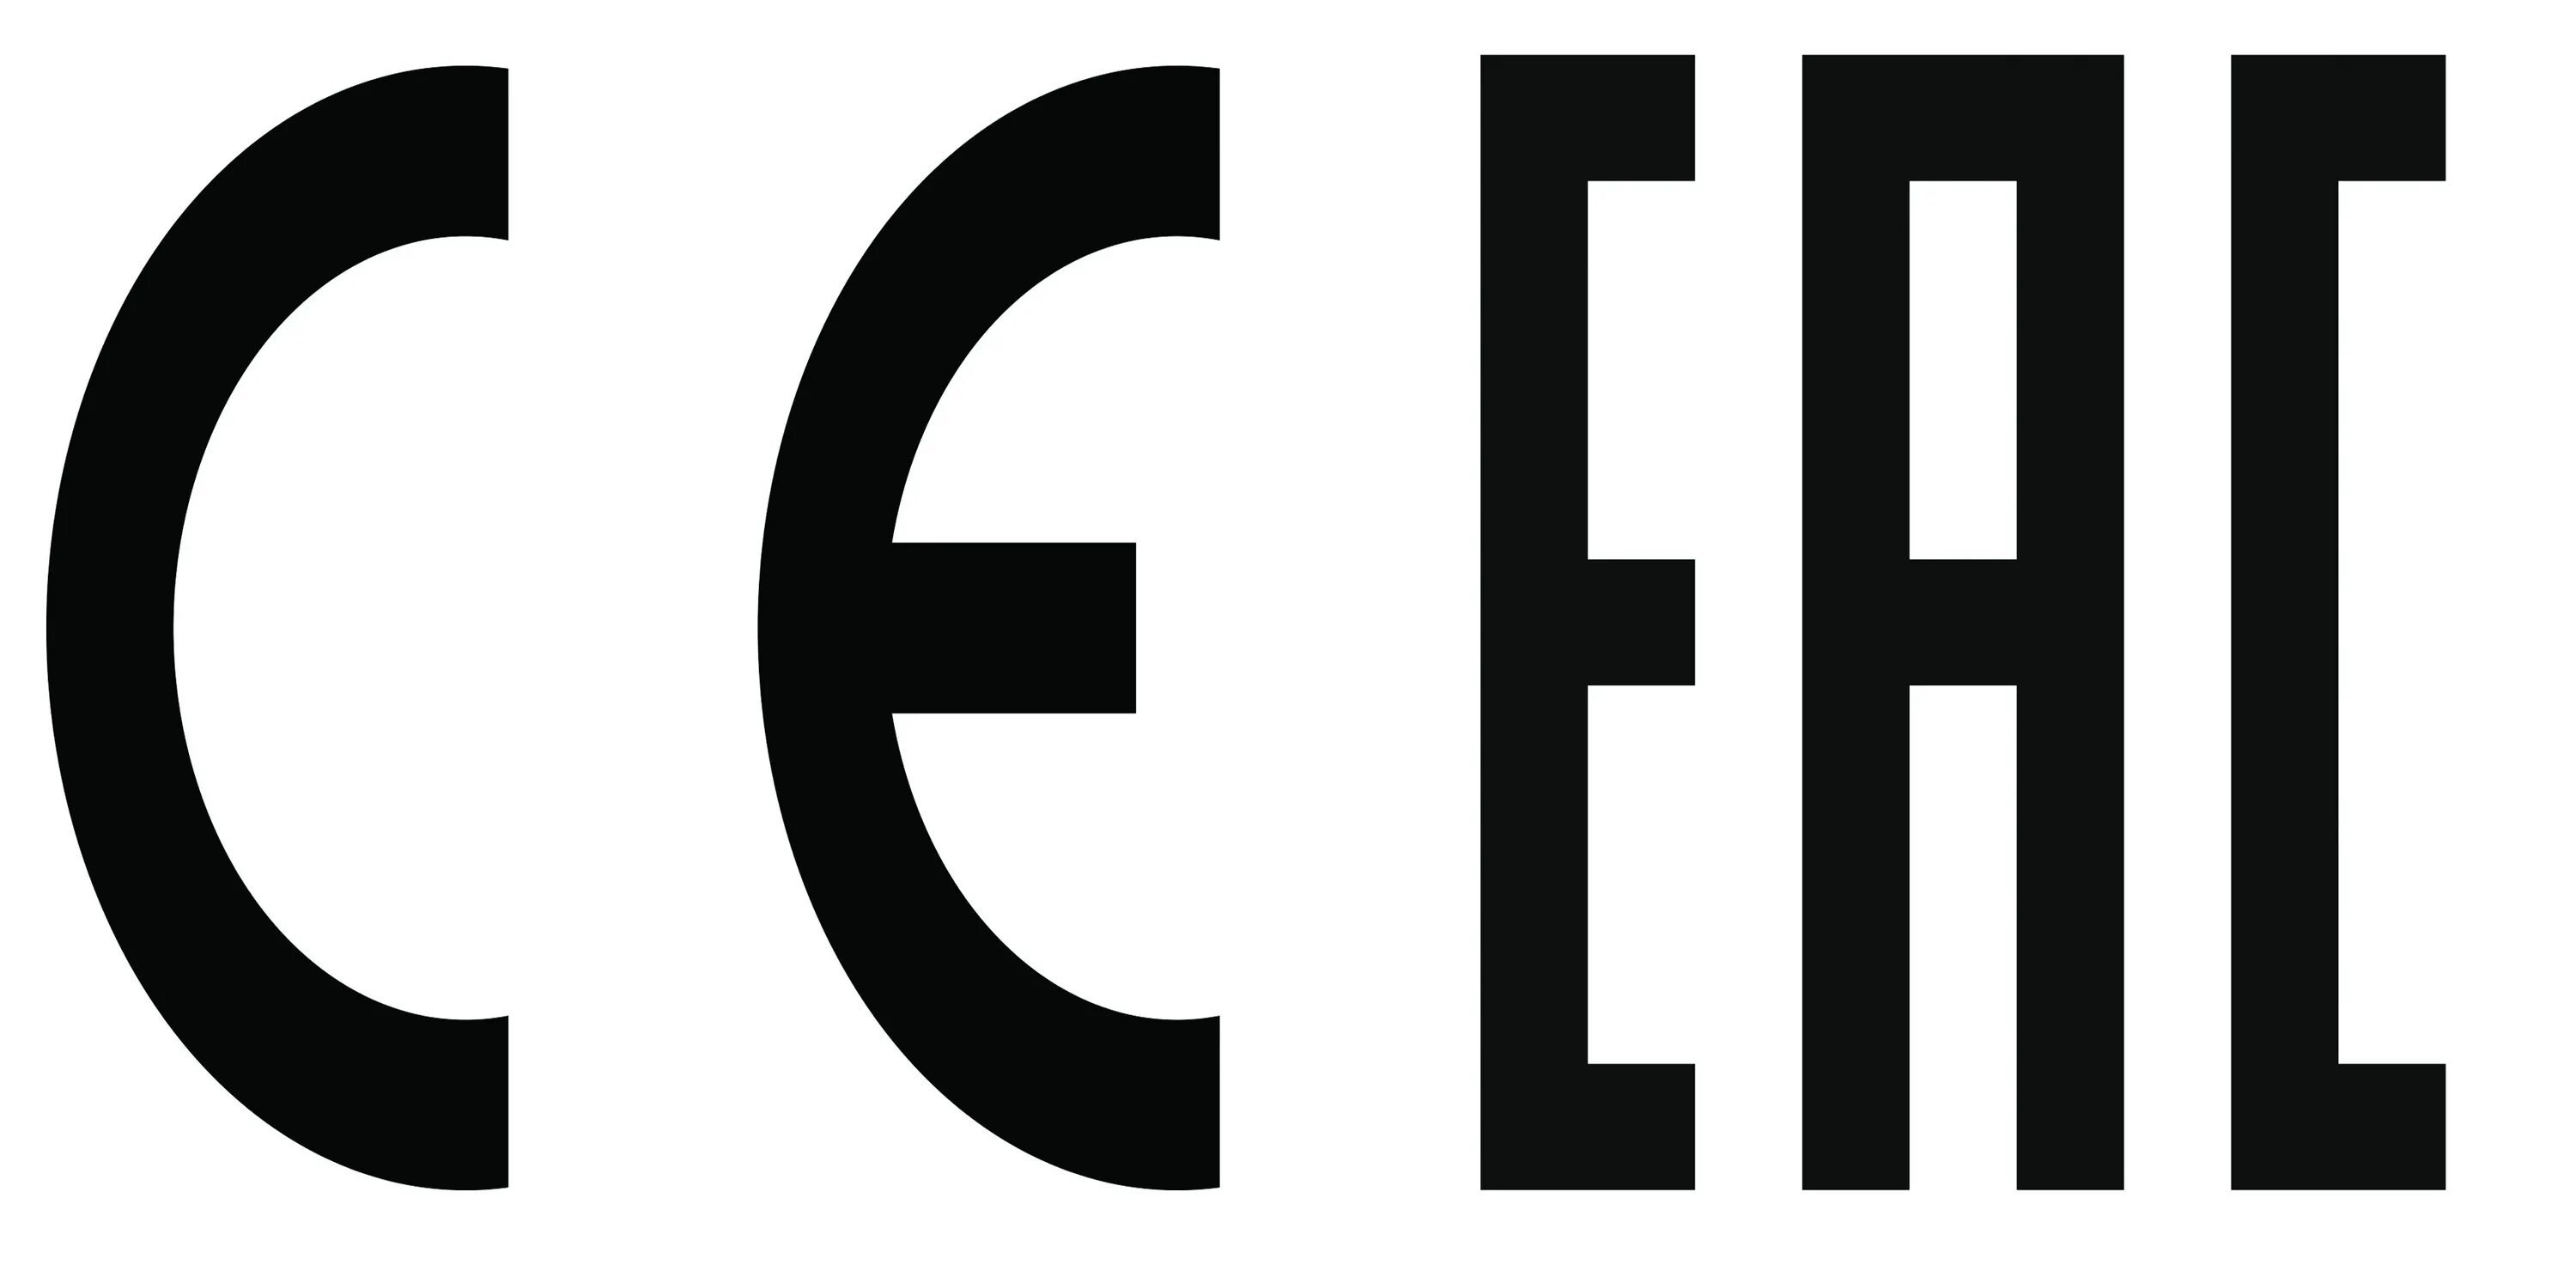 C э т. EAC знак. EAC логотип. Знак сертификации ЕАС. Значок сертификата соответствия ЕАС.